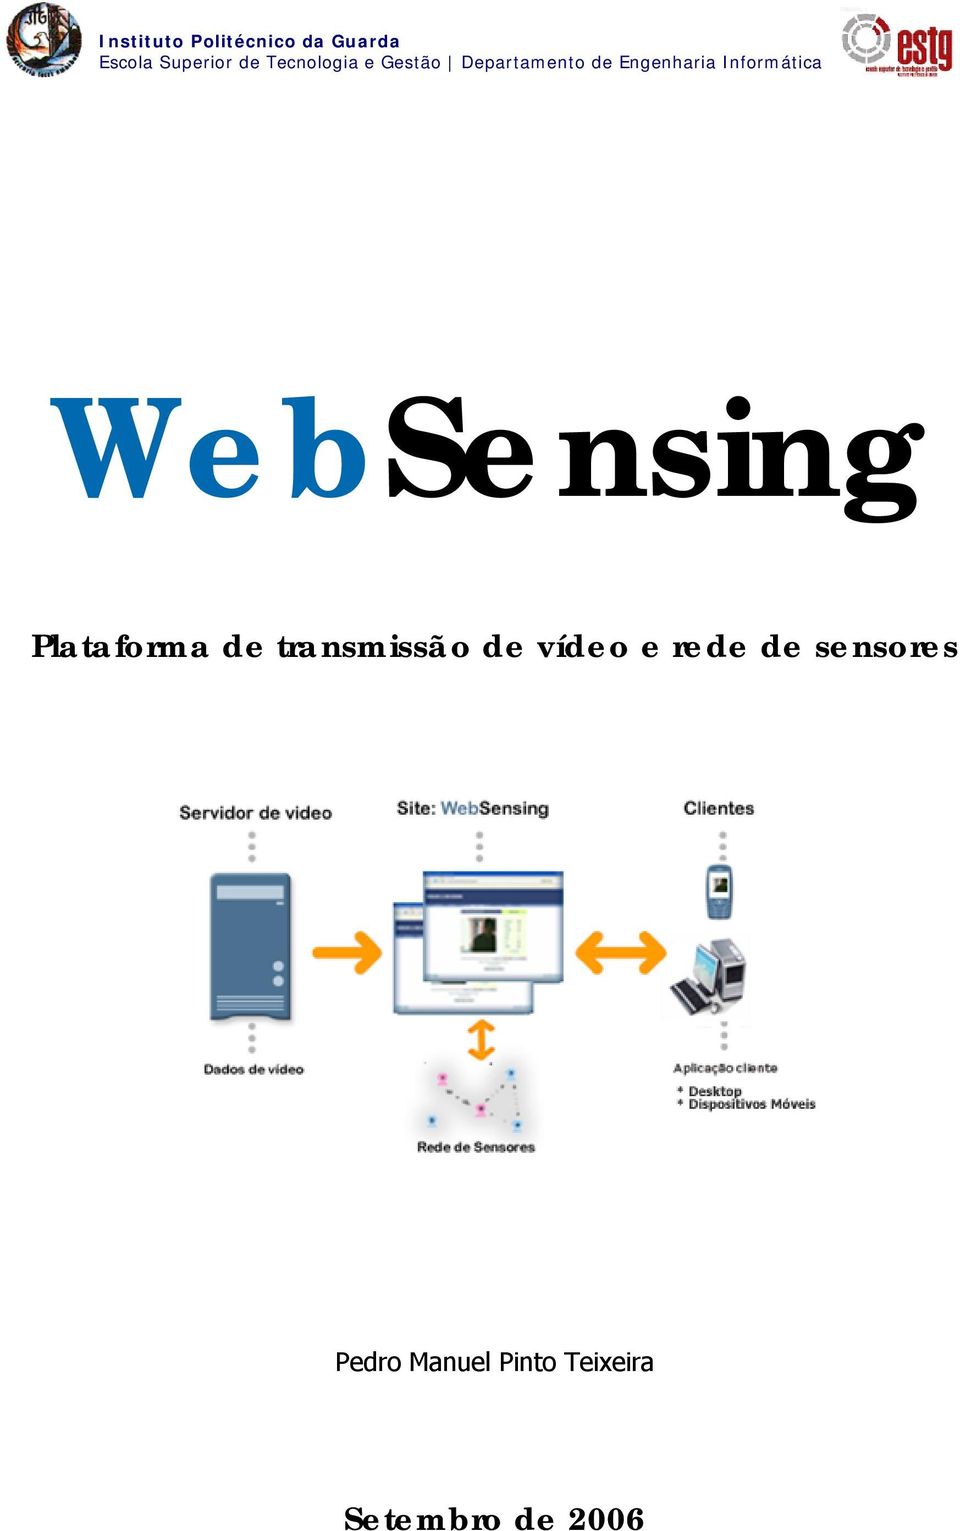 WebSensing Plataforma de transmissão de vídeo